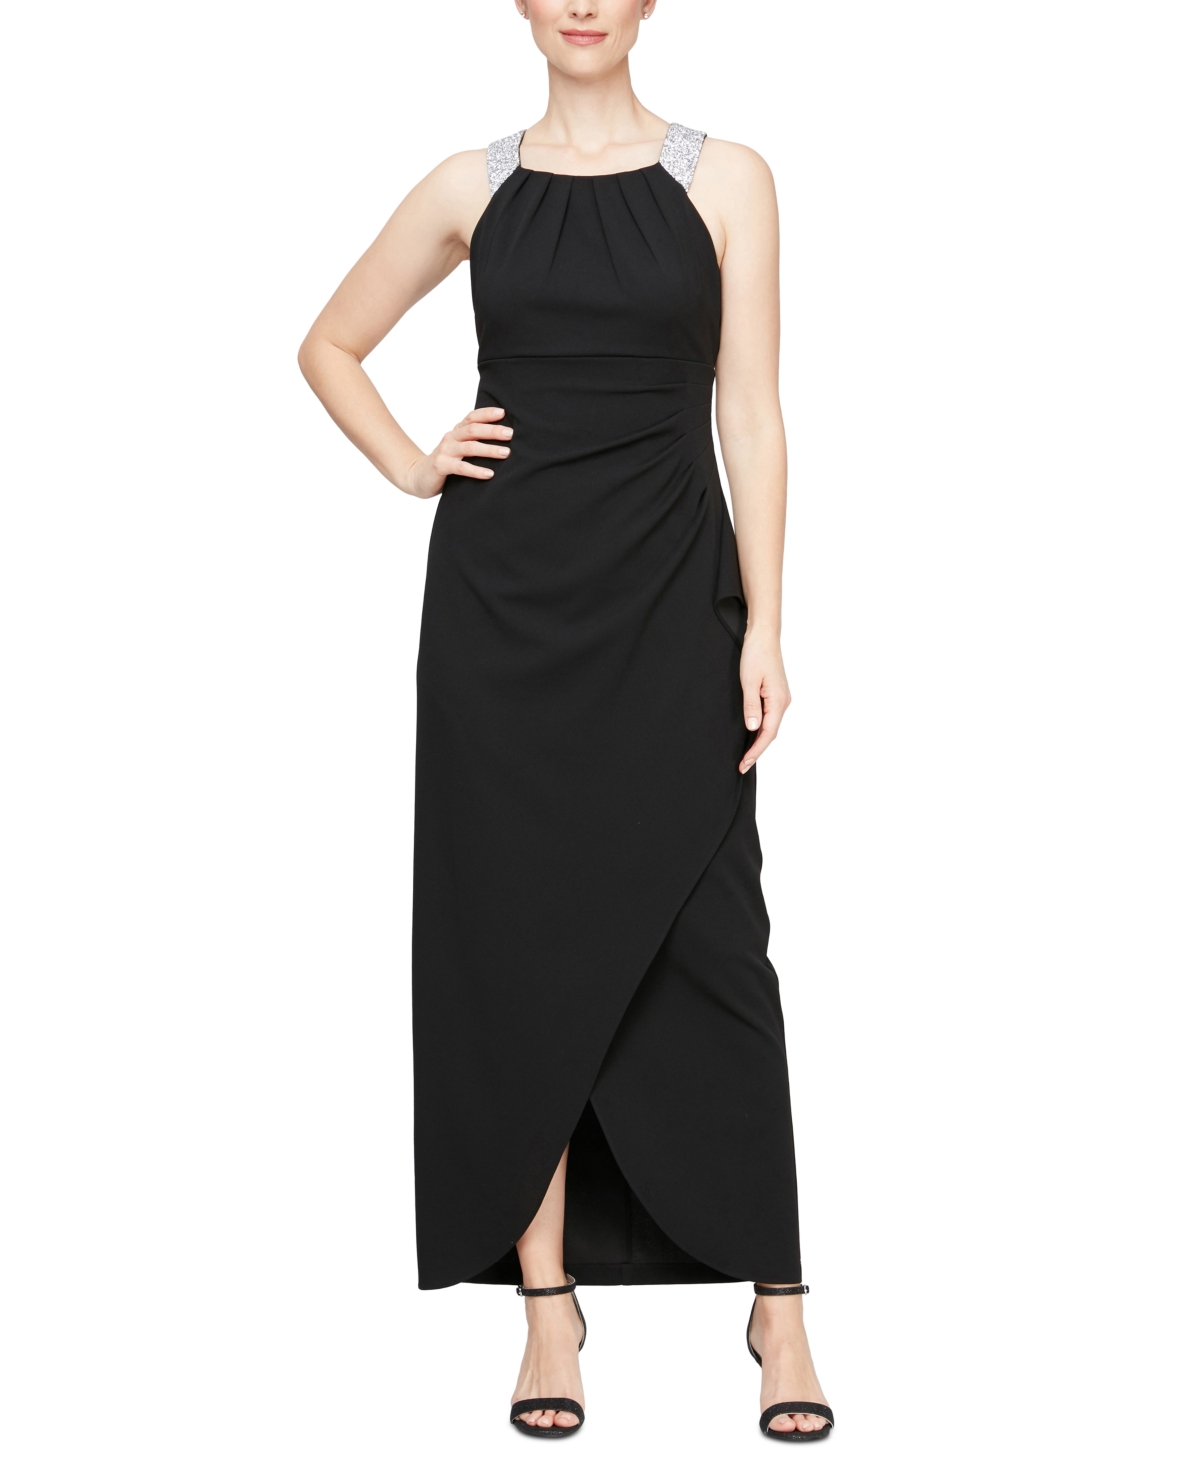 Petite Rhinestone-Collar Halter Dress - Black